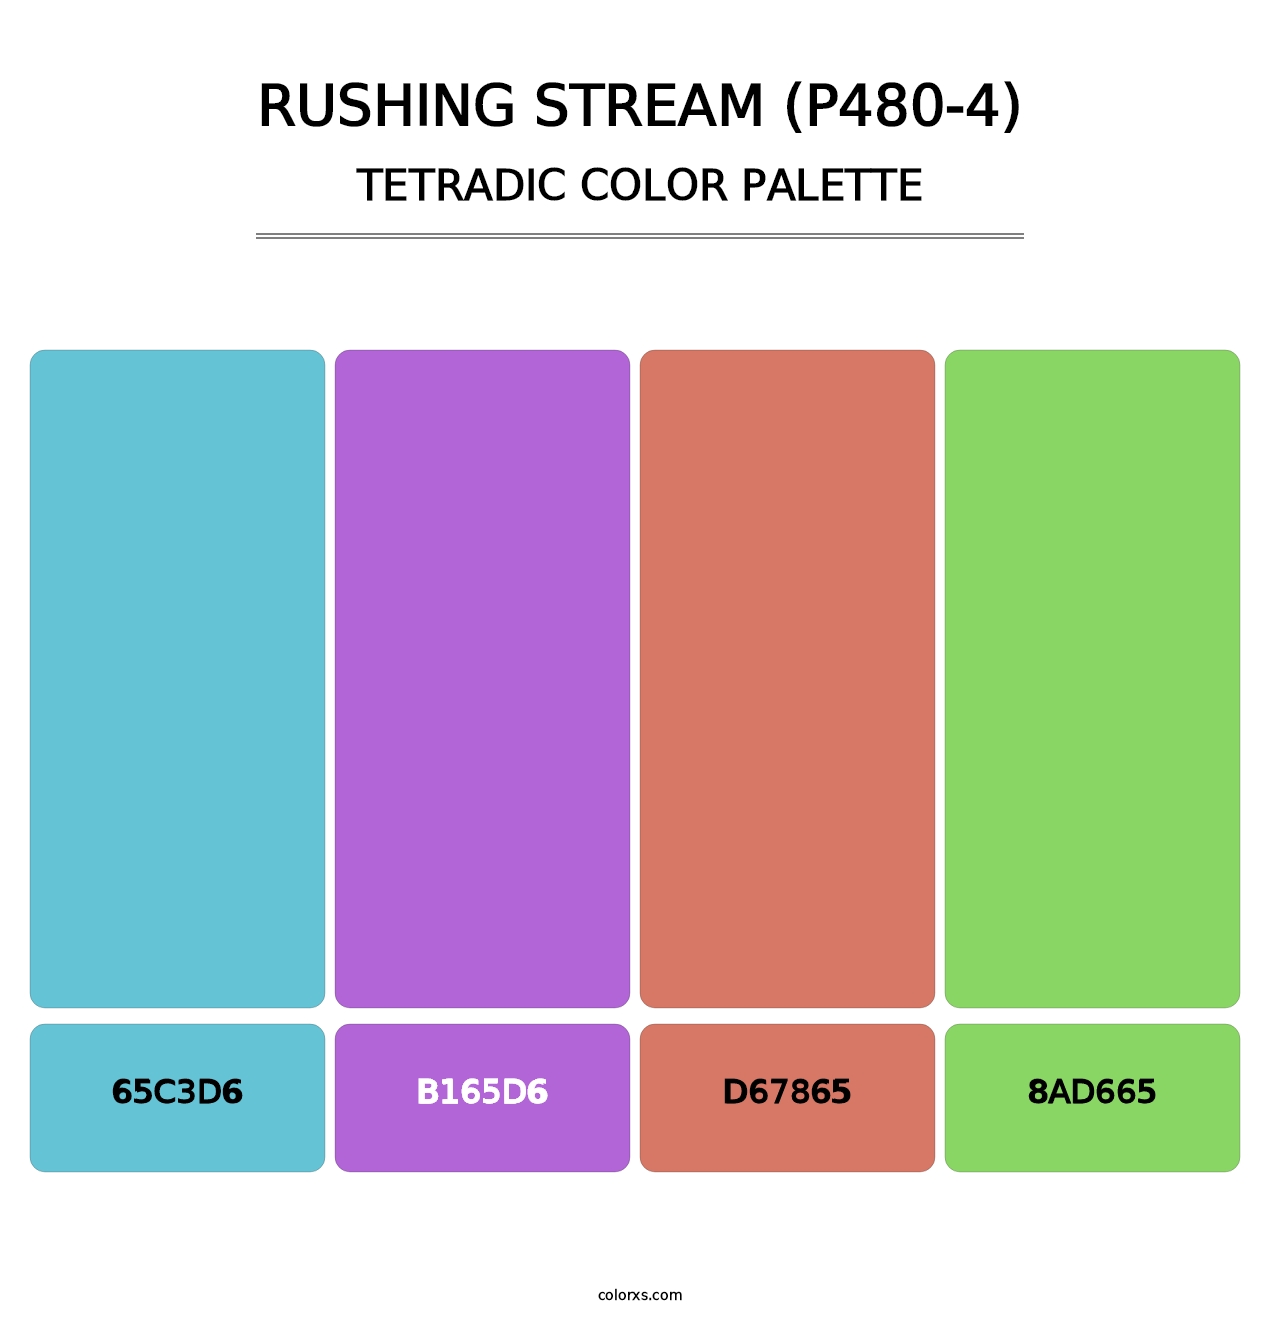 Rushing Stream (P480-4) - Tetradic Color Palette